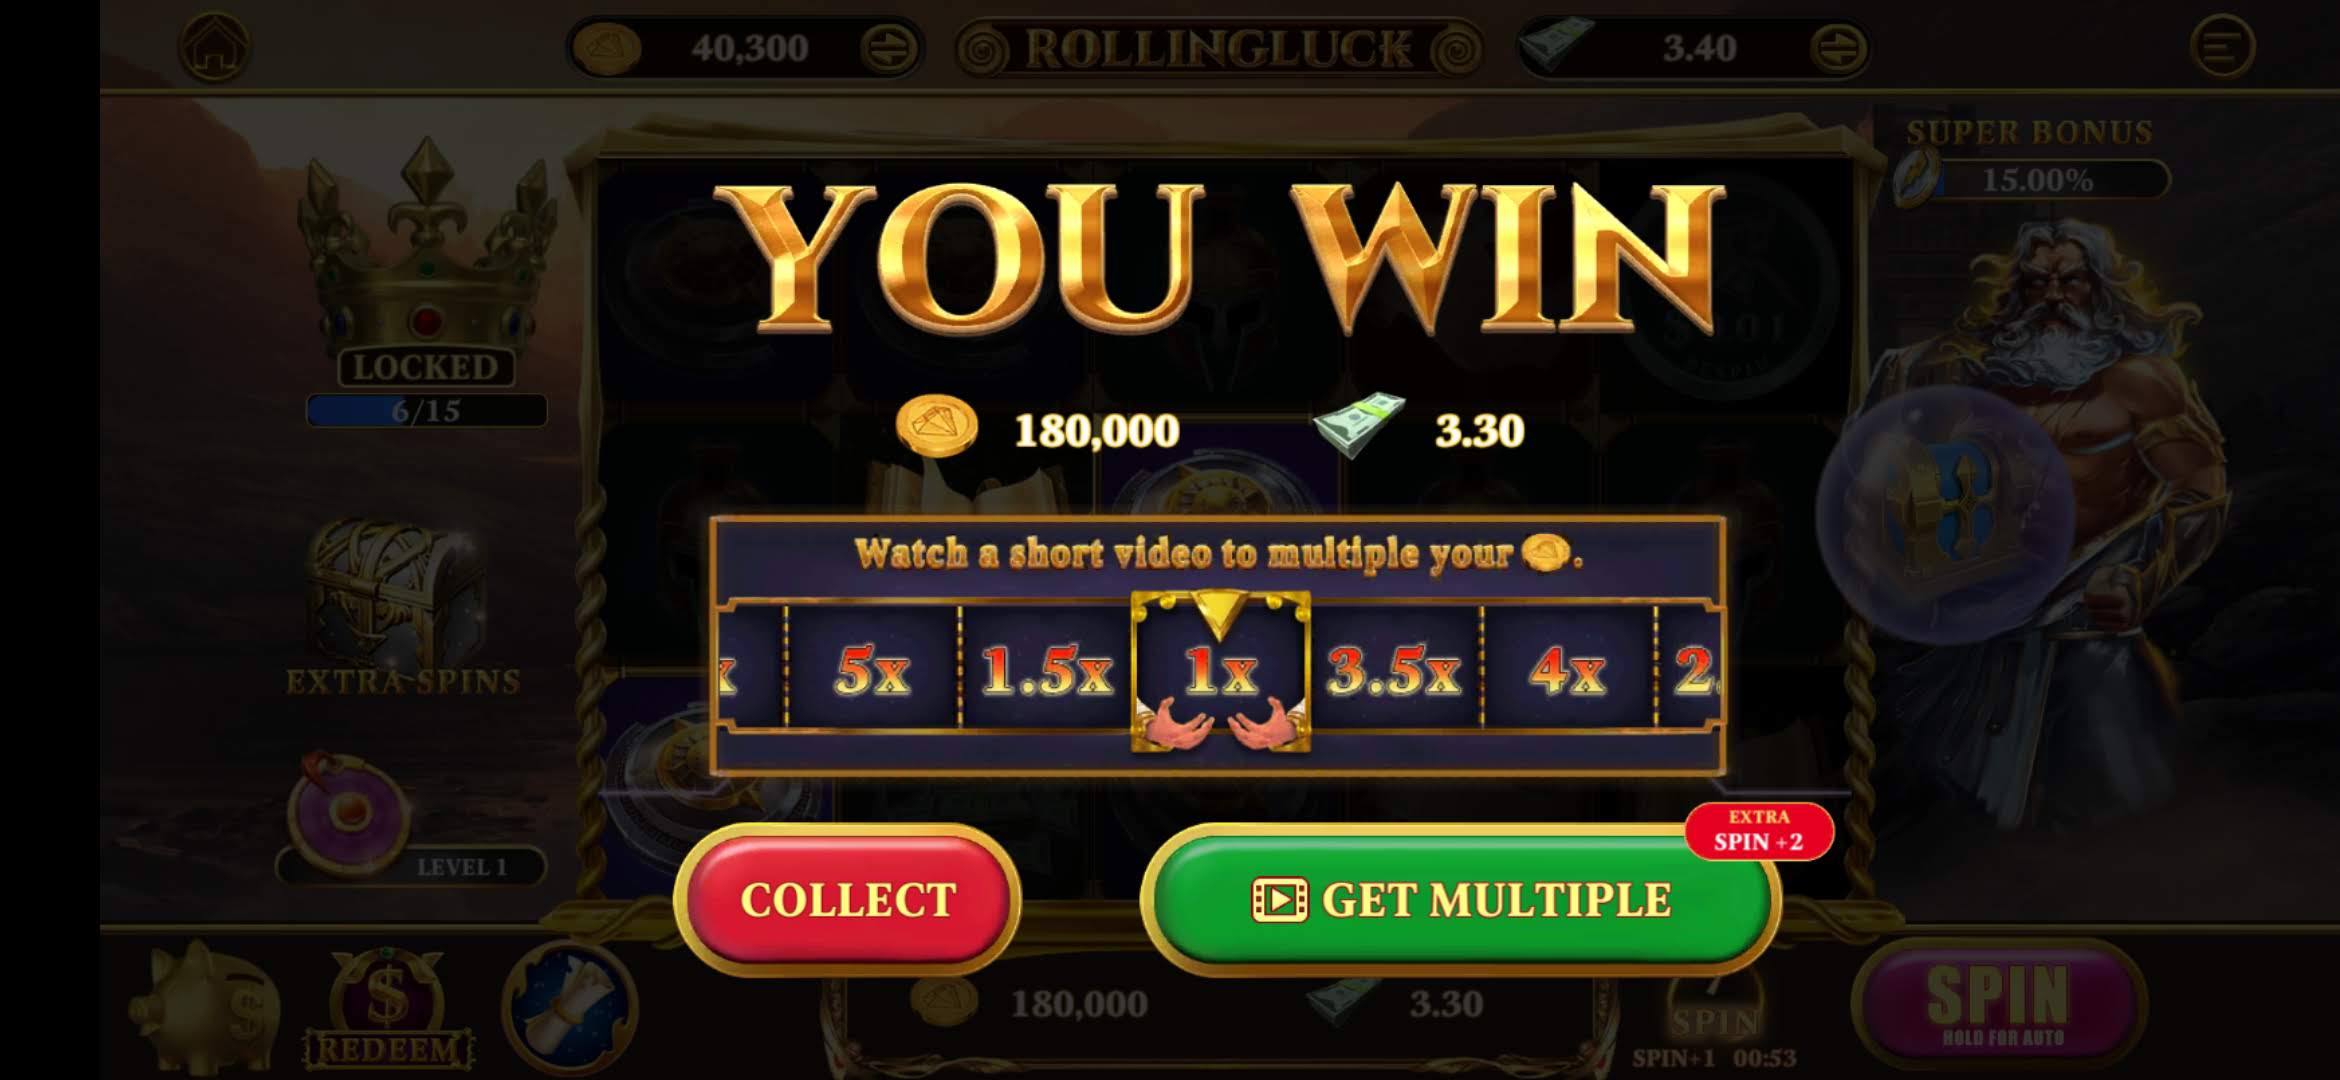 Rolling Luck App big bonus